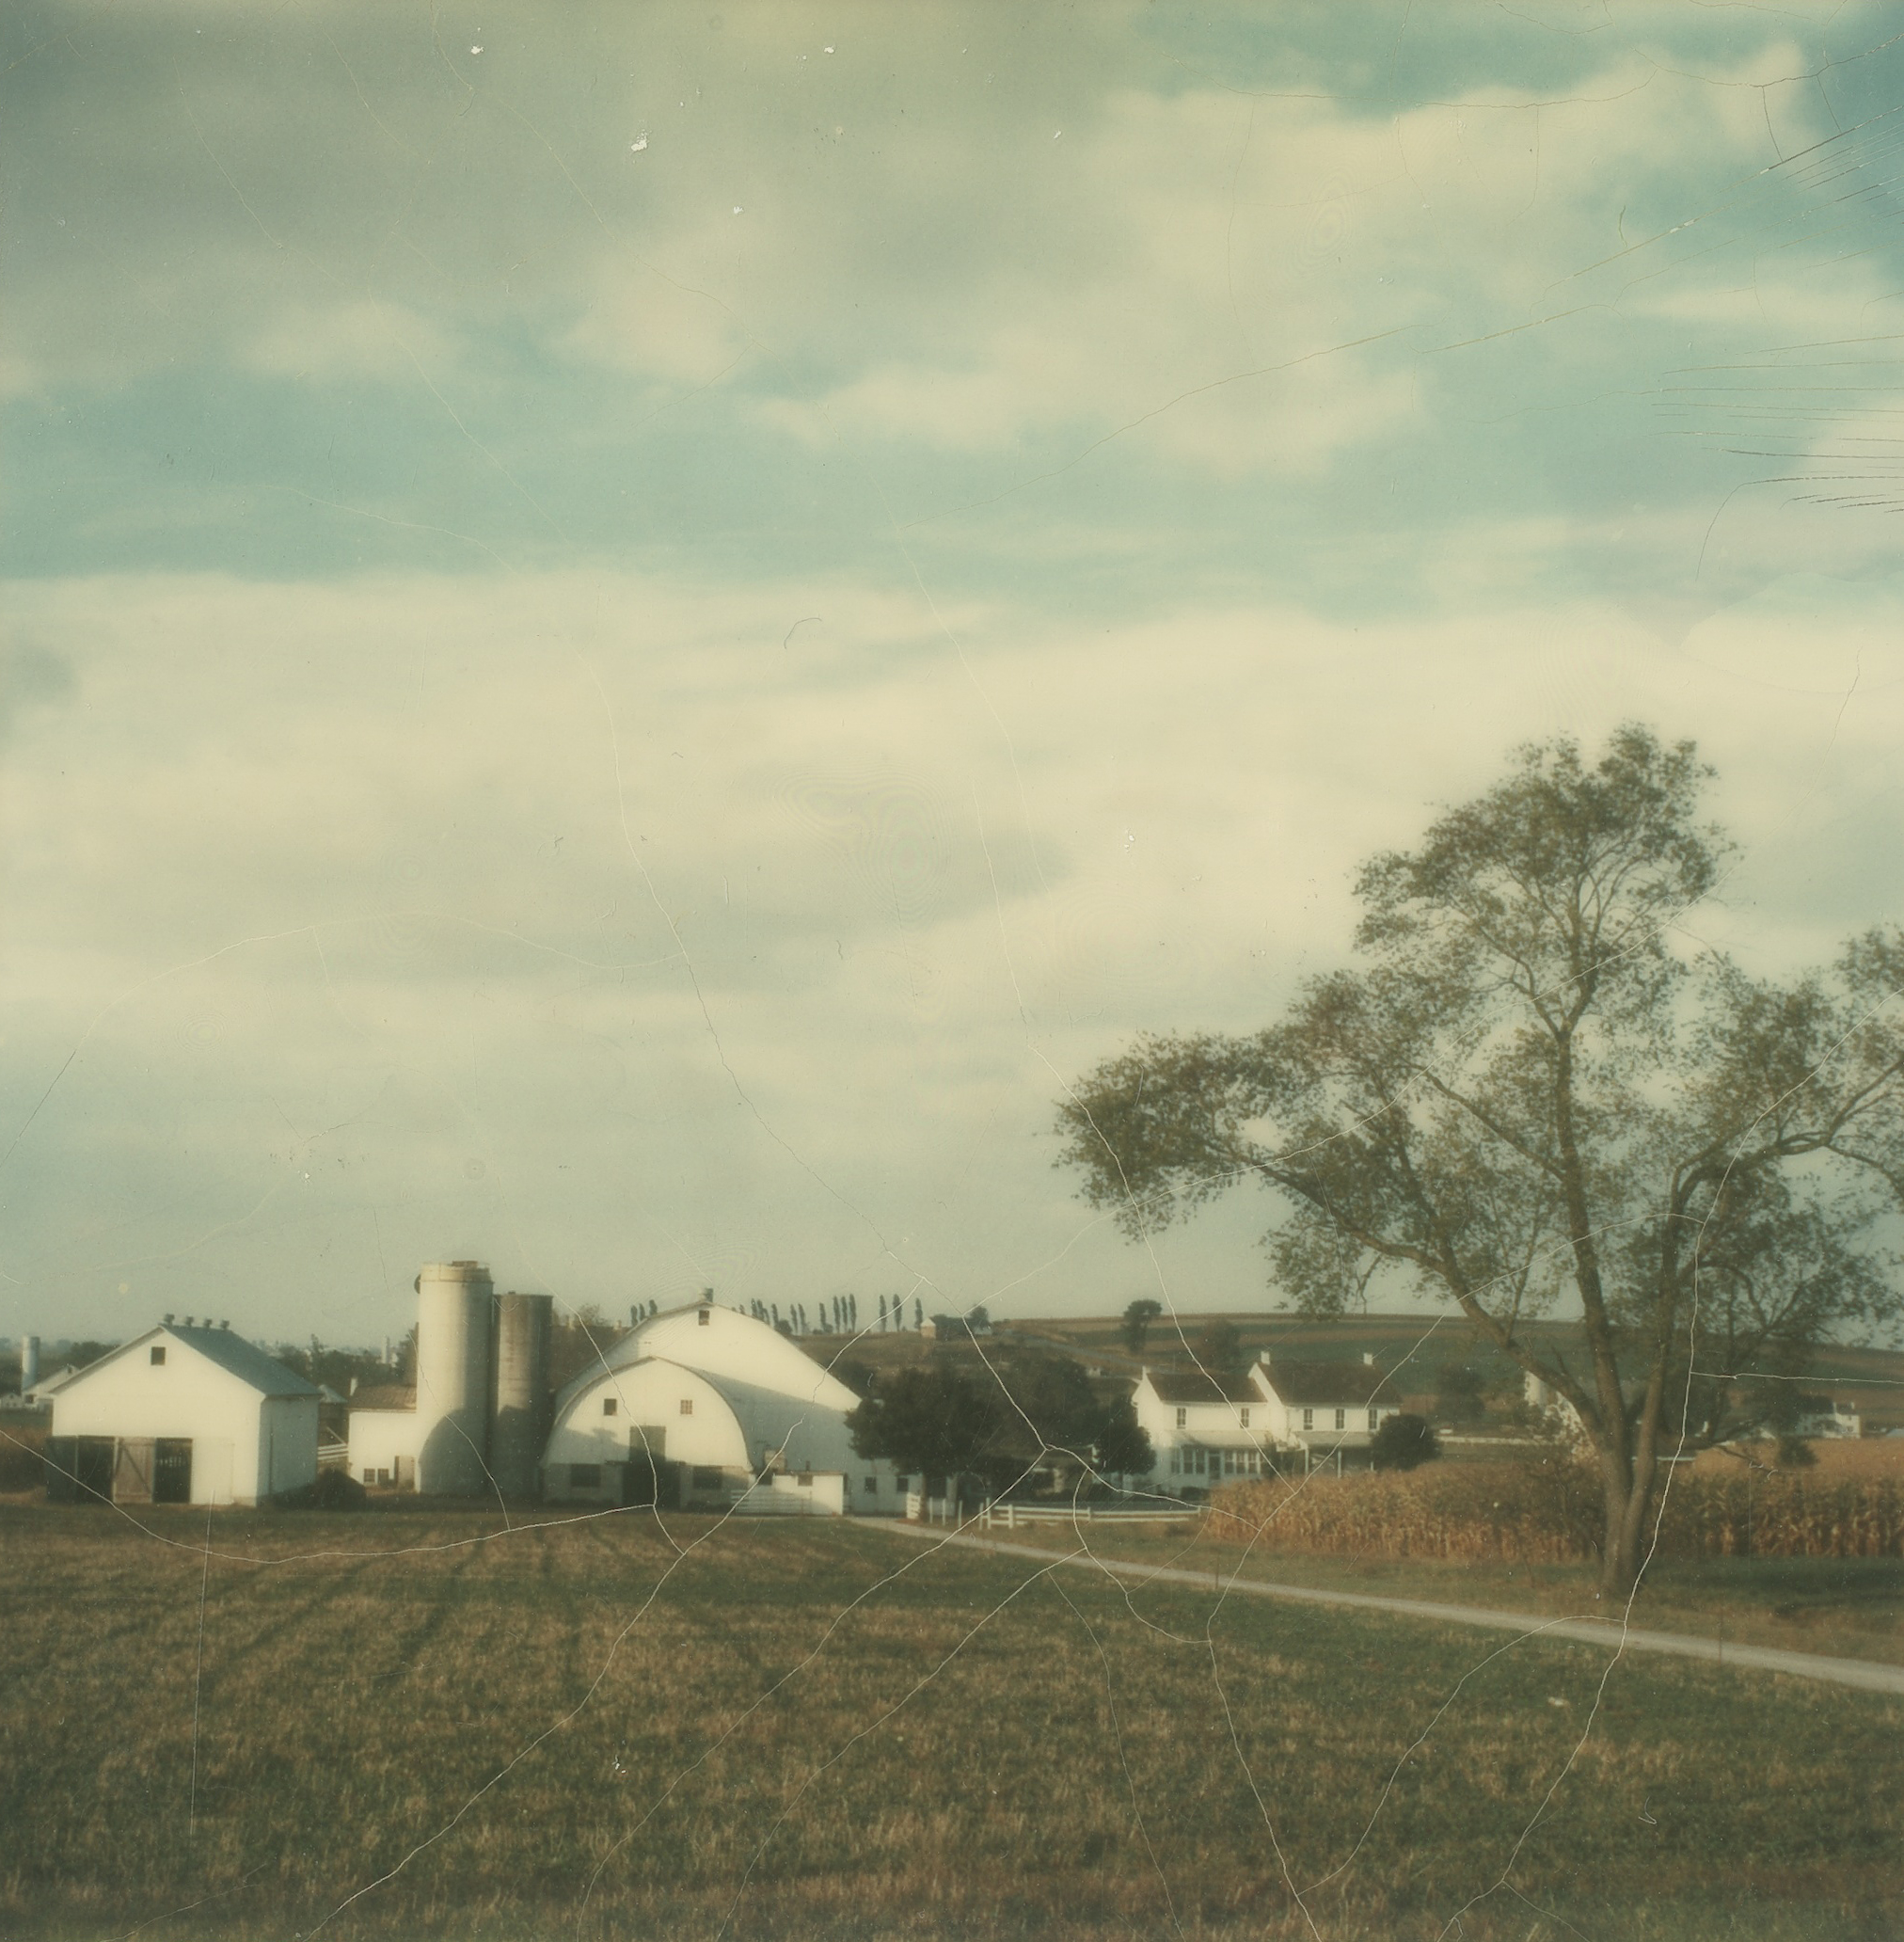 A farm in Pennsylvania photographed with a Polaroid SX-70 camera, 1972.